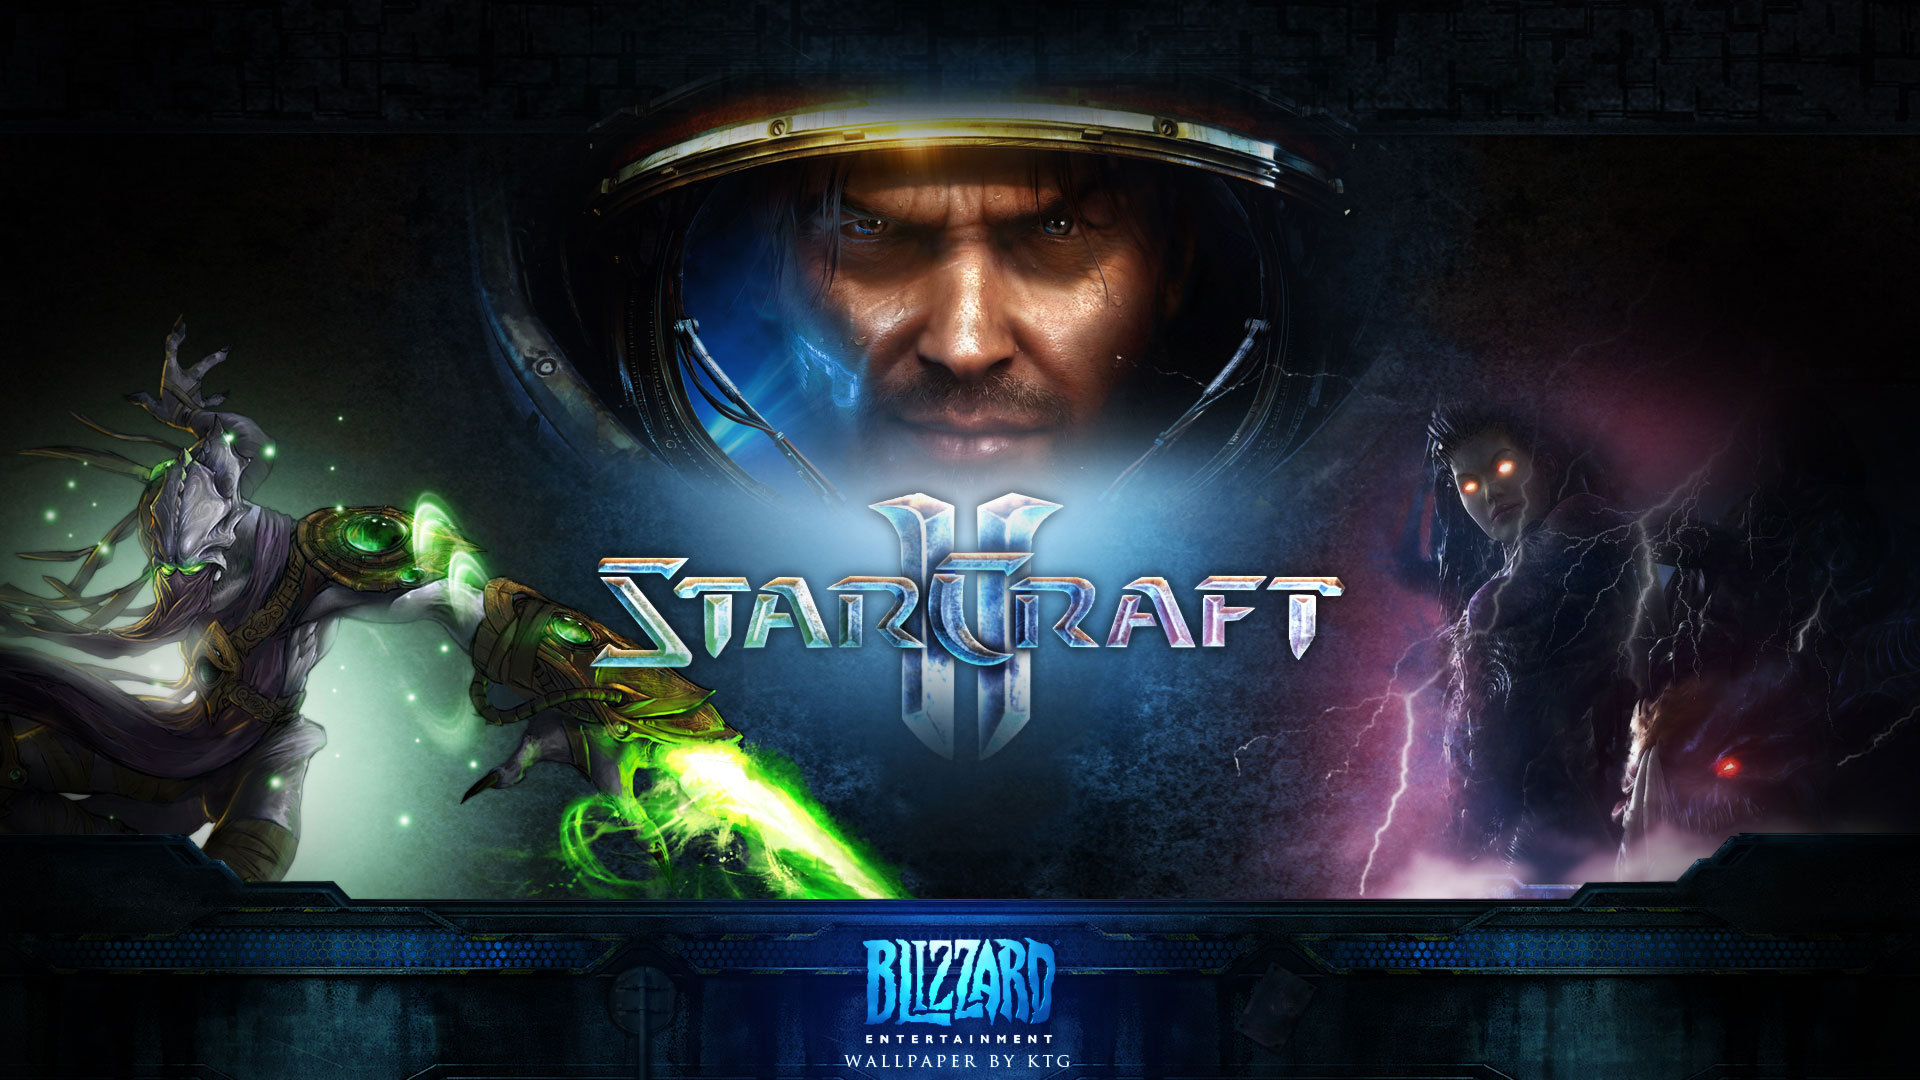 Video Game Starcraft II HD Wallpaper | Background Image